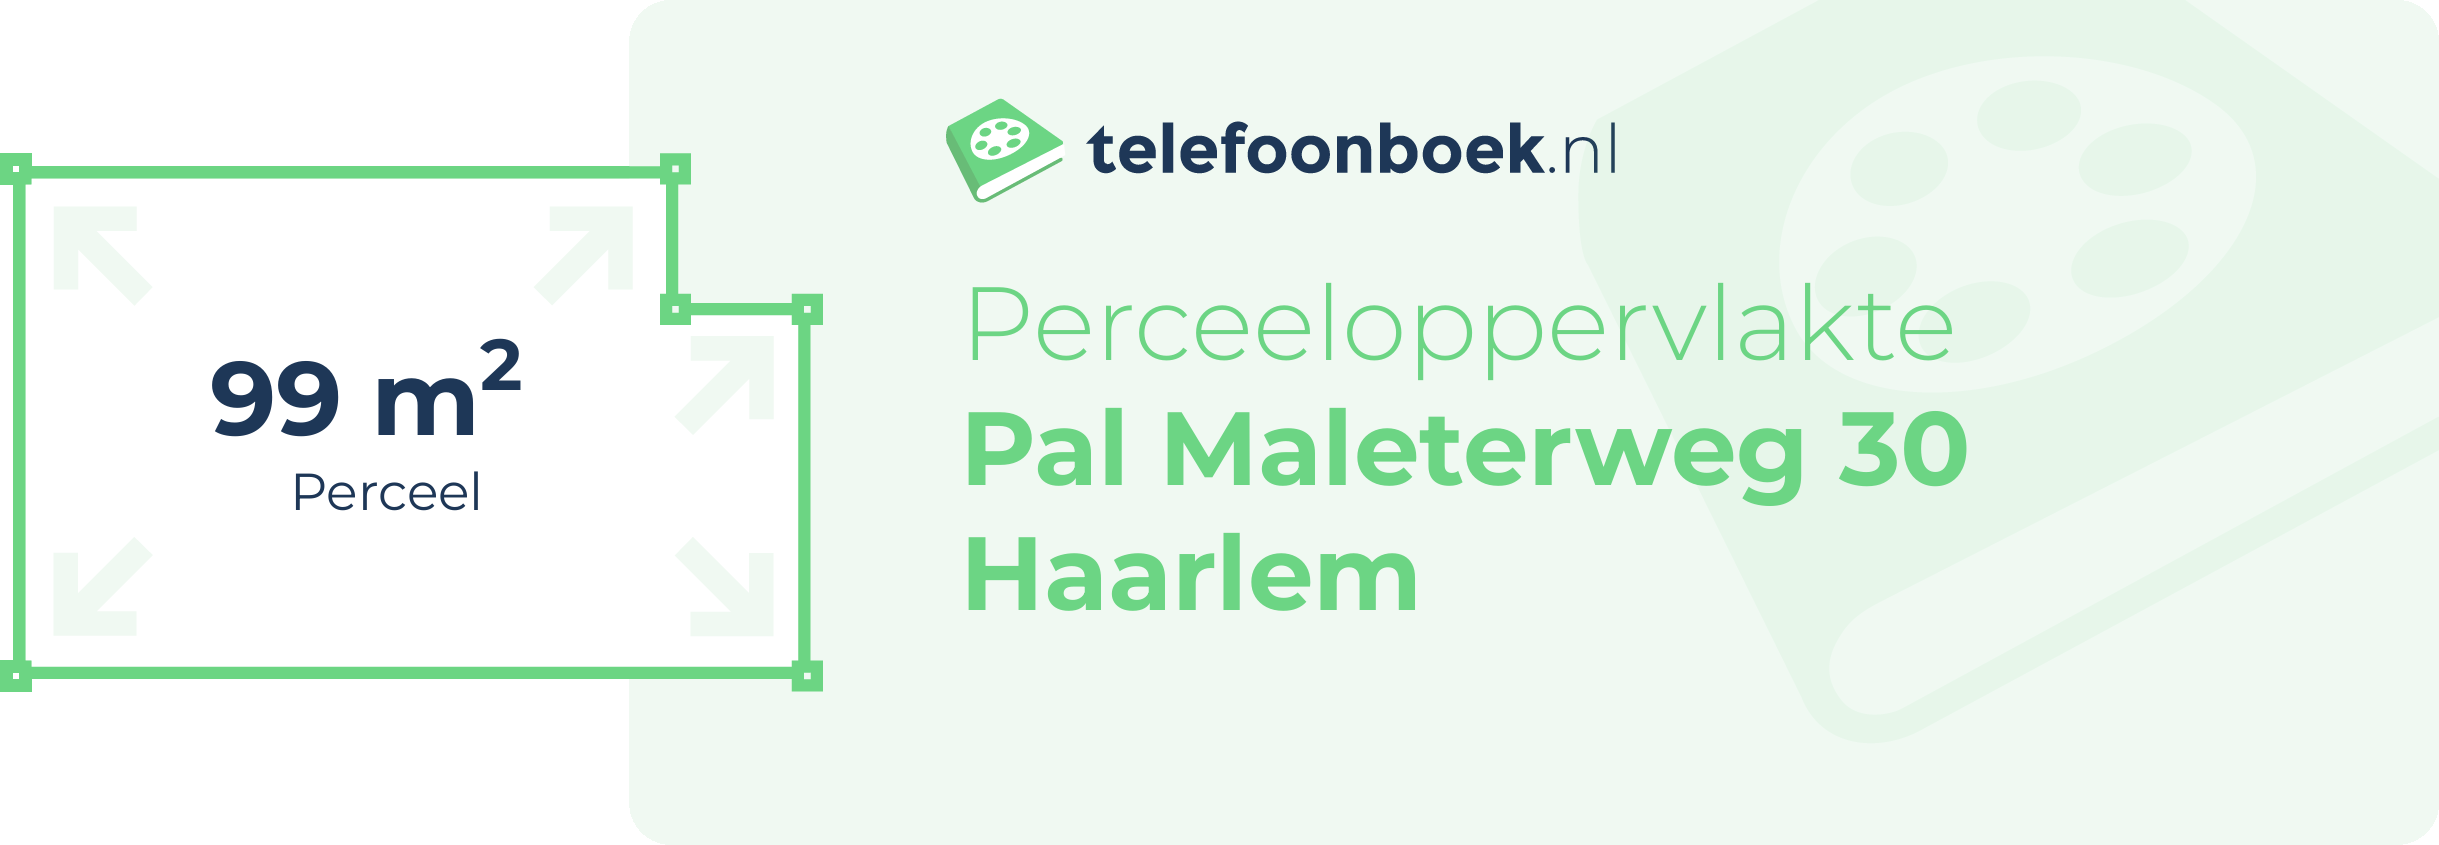 Perceeloppervlakte Pal Maleterweg 30 Haarlem